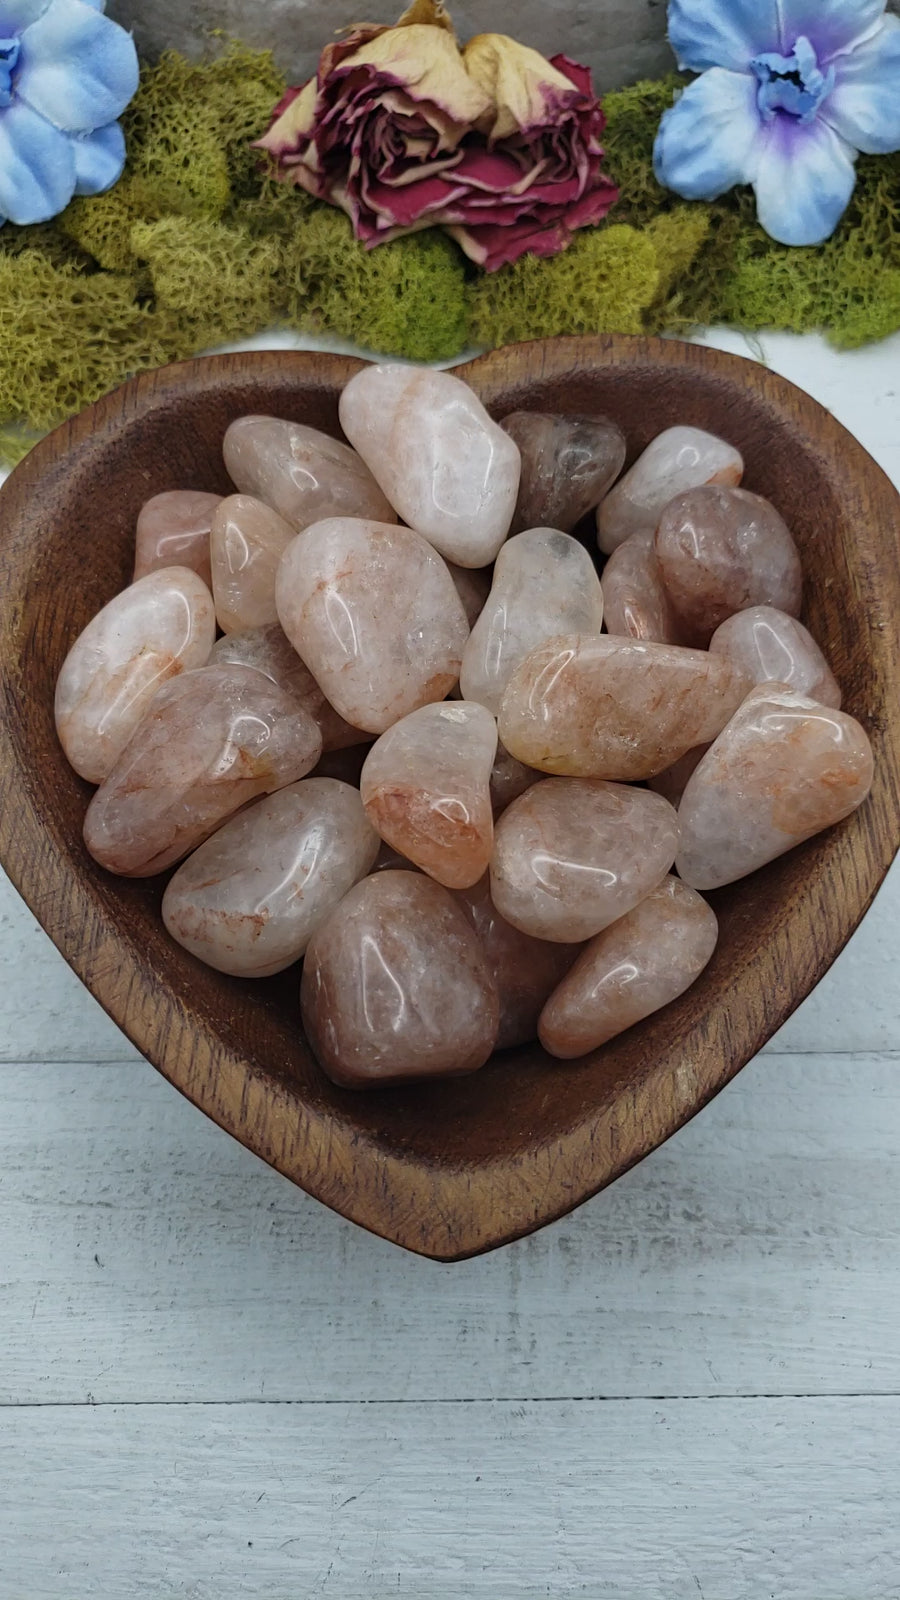 video of light strawberry quartz stones in heart-shaped bowl